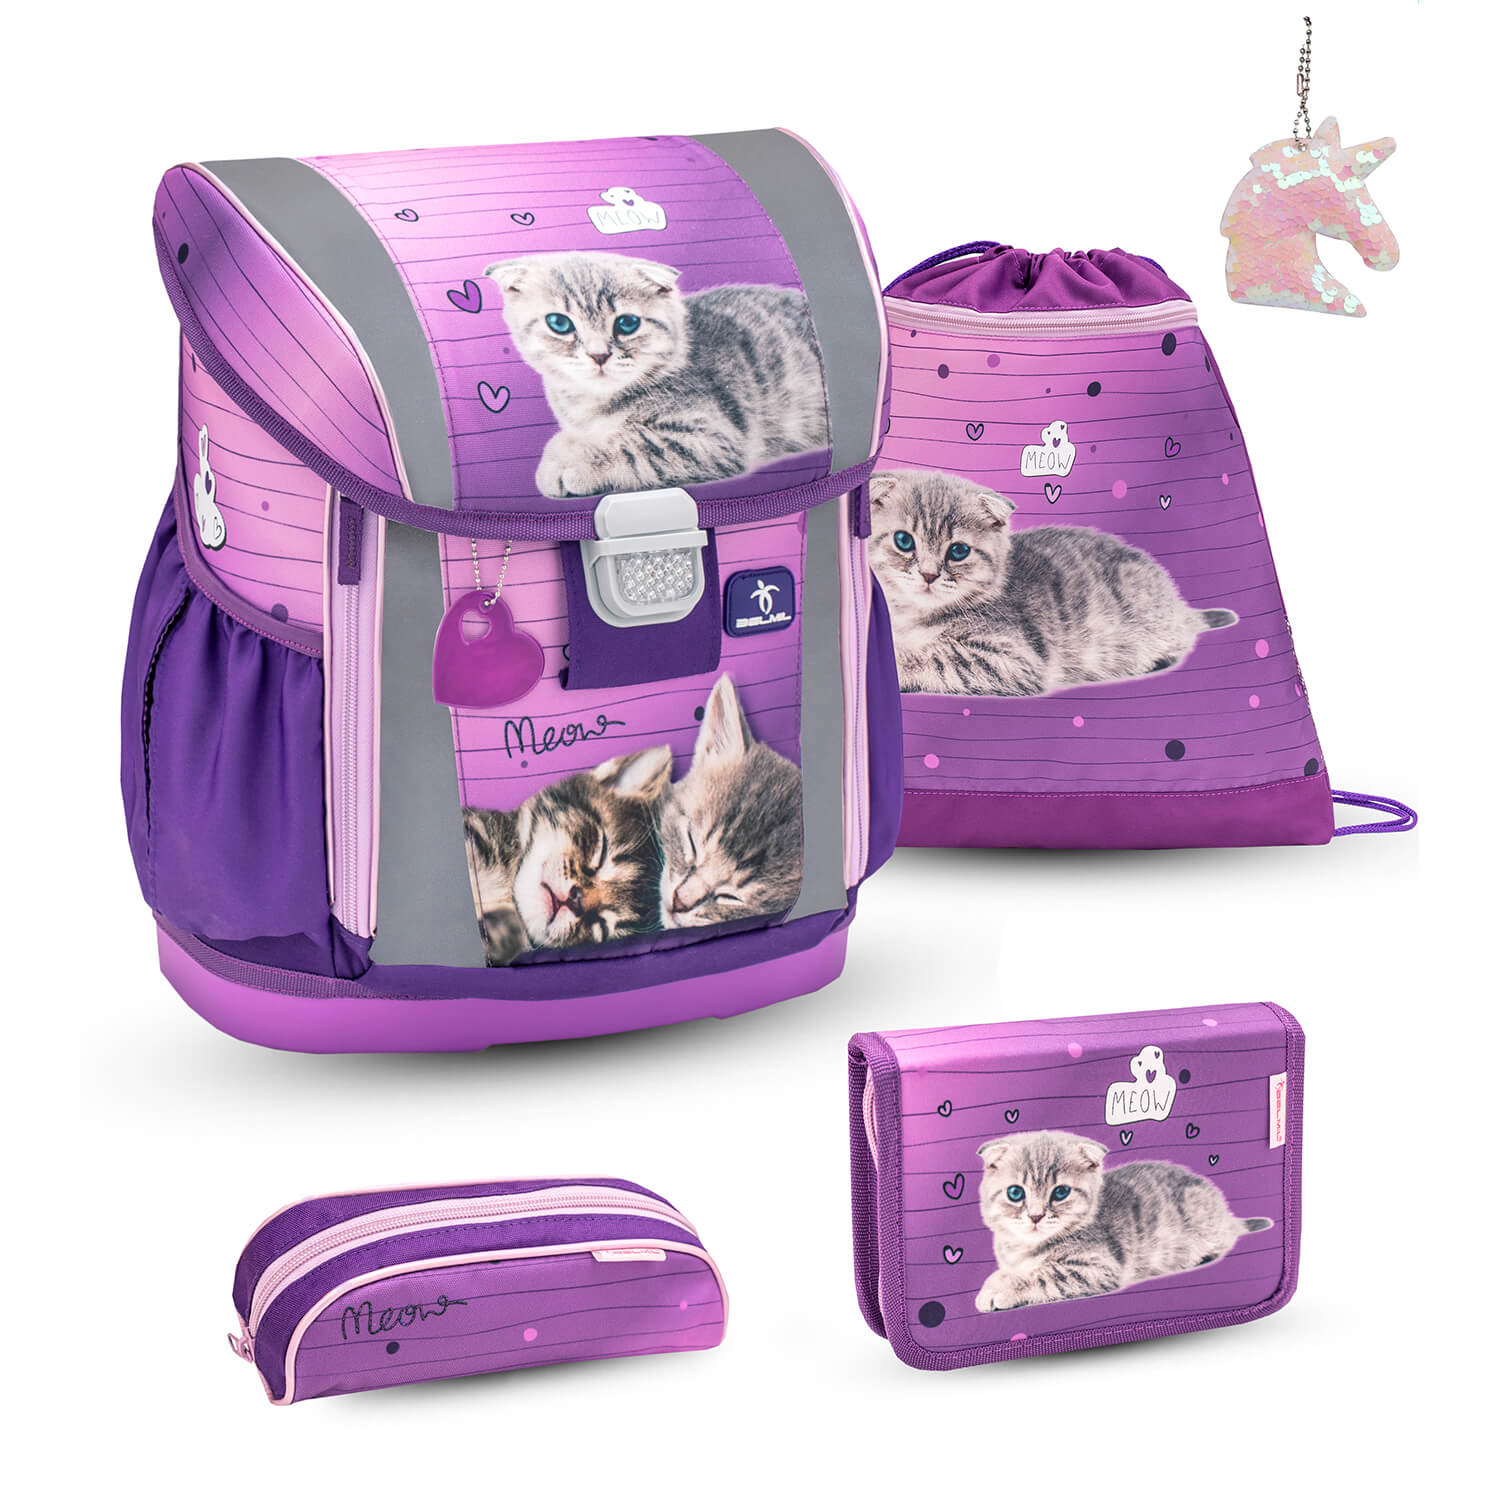 Customize Me Little Caty schoolbag set 5 pcs with GRATIS keychain